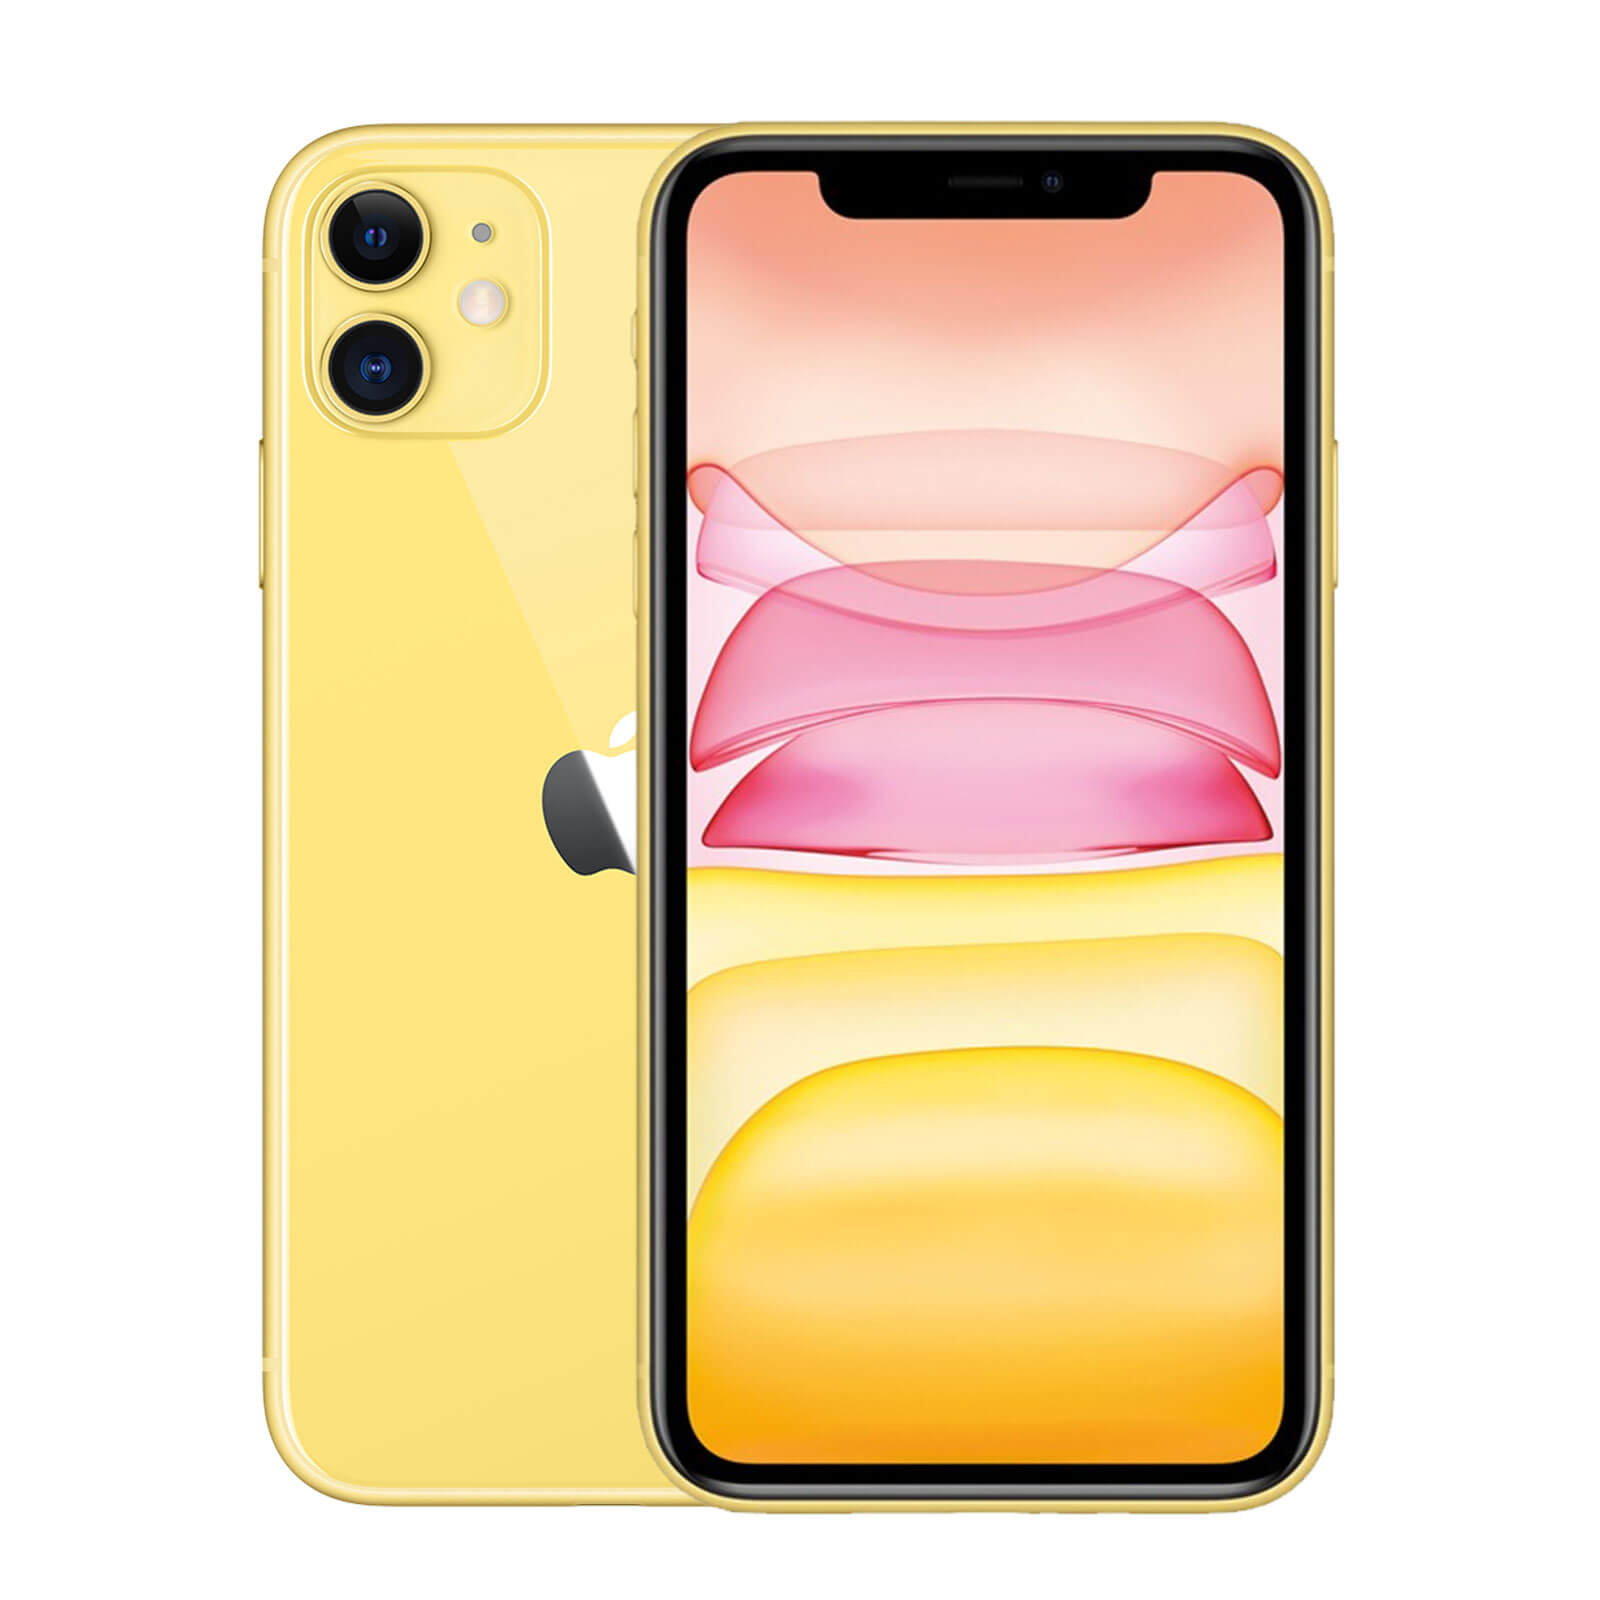 Apple iPhone 11 64GB Yellow Very Good - Sprint Smartphone Apple 64GB Yellow Very Good